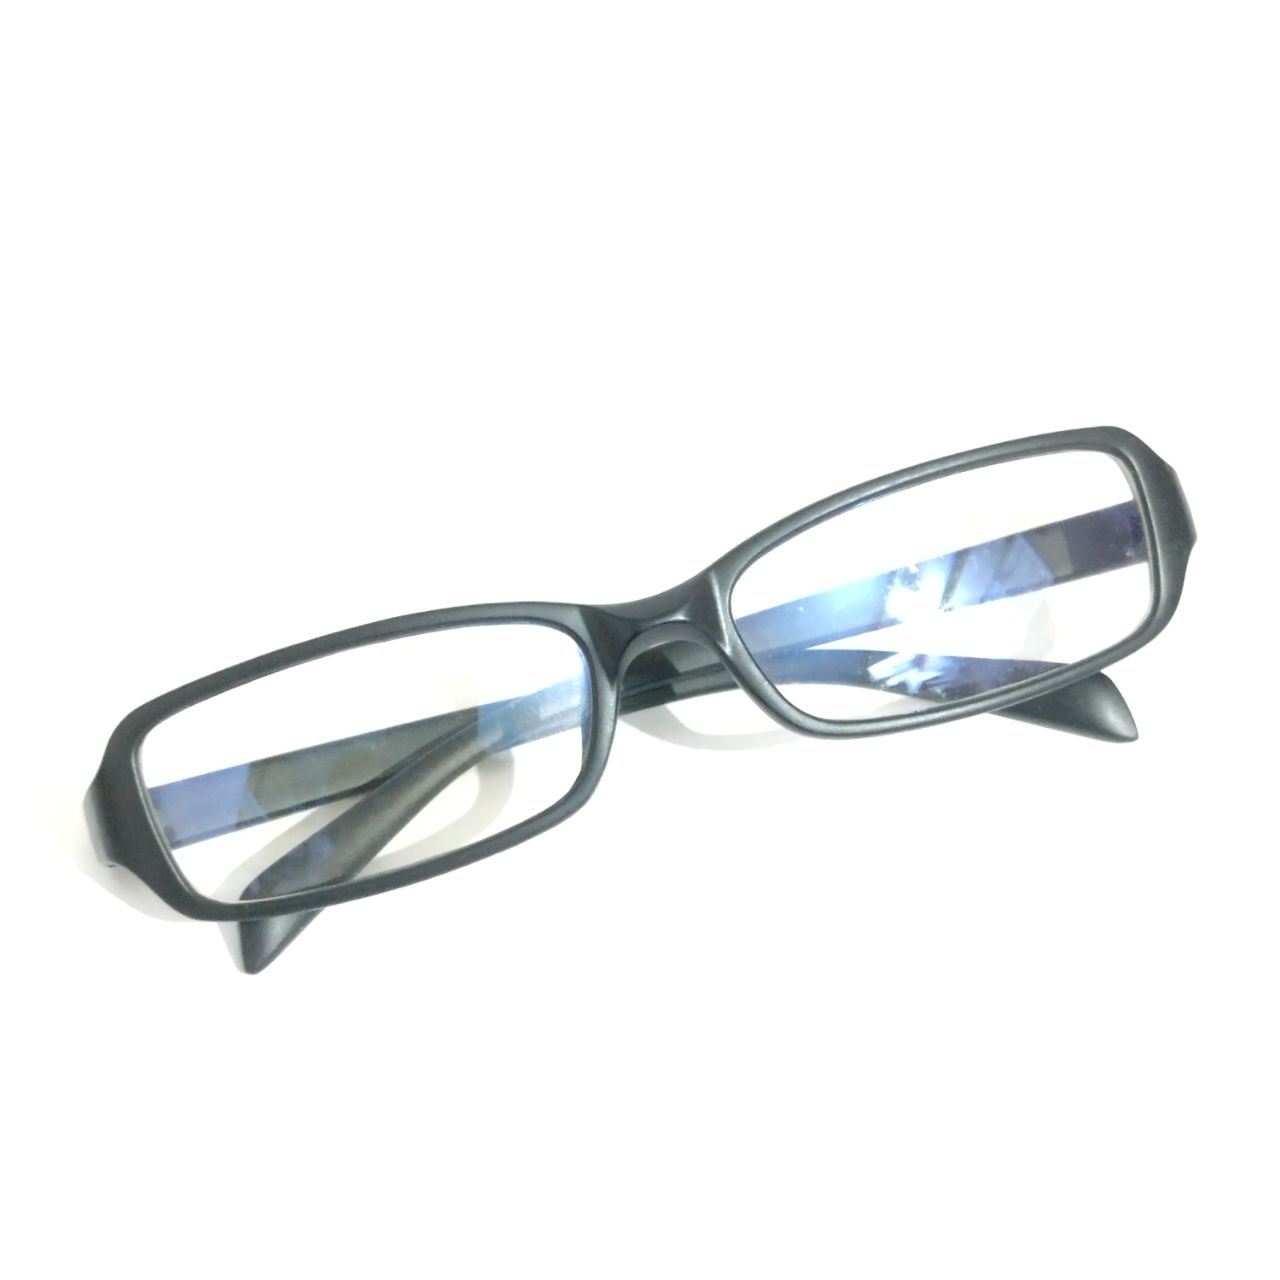 Black Computer Glasses with Anti Glare Coating